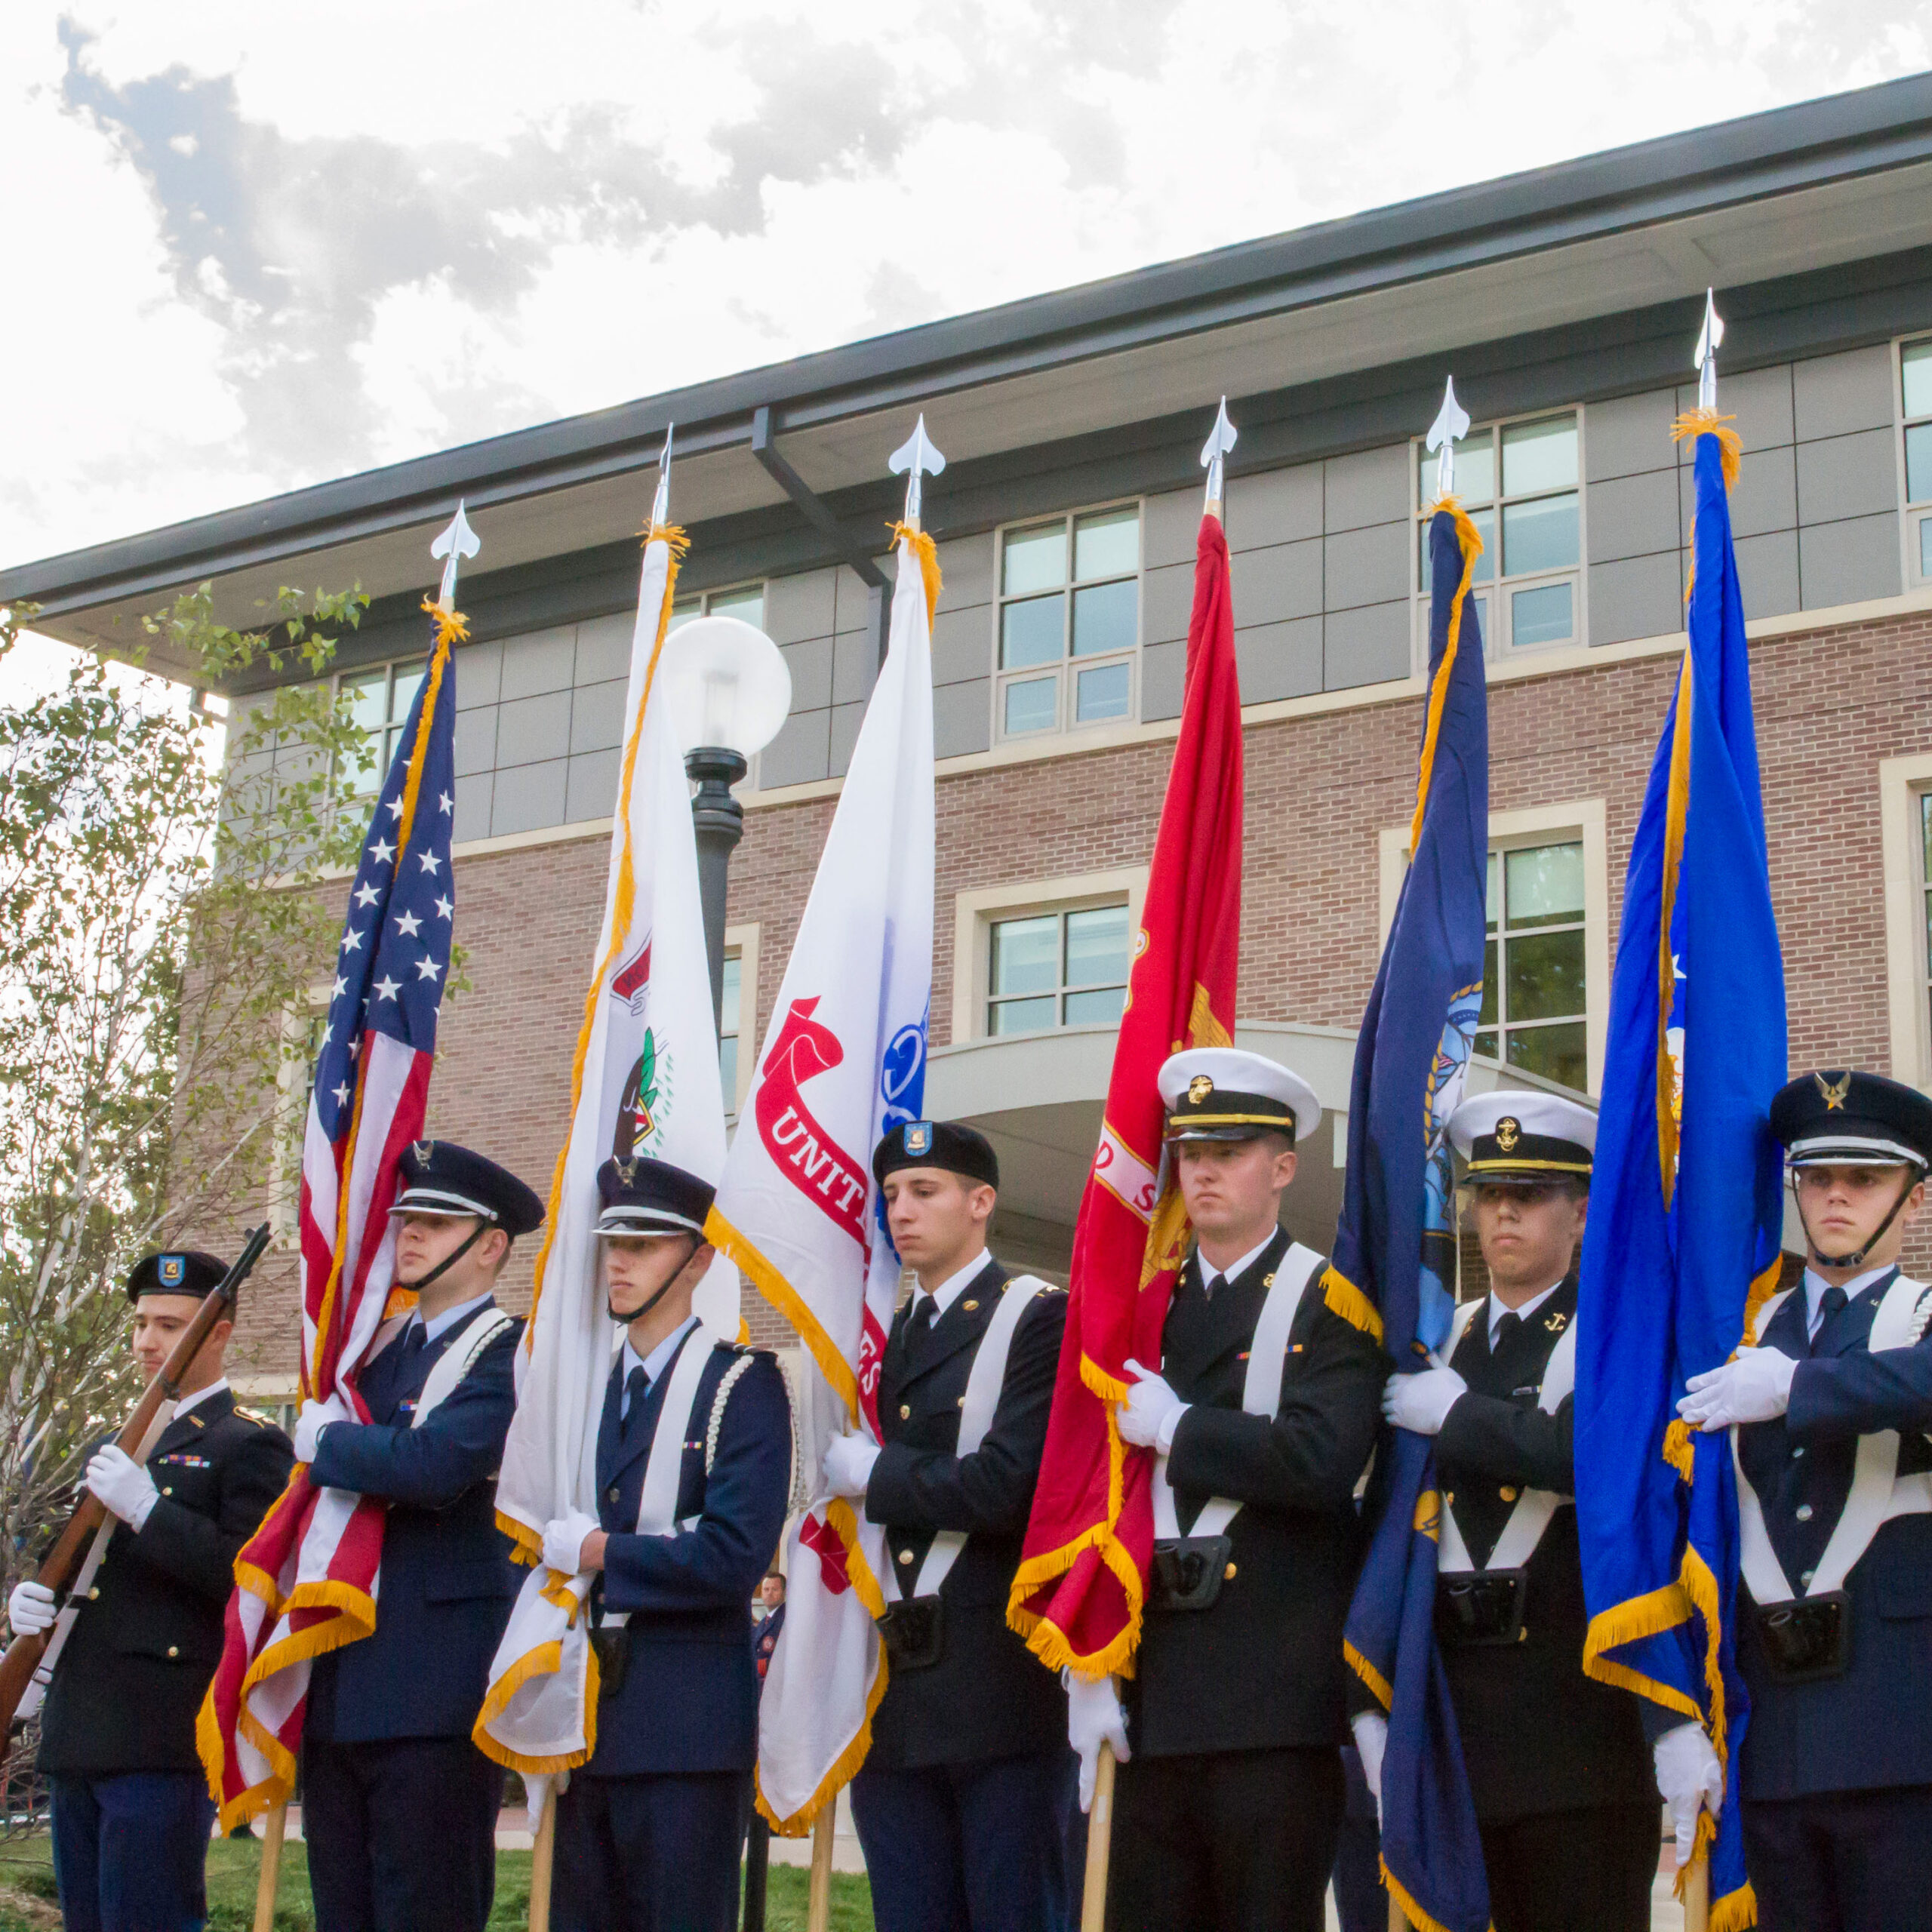 Men standing in front of the Chez Veteran's Center in uniform holding flags.